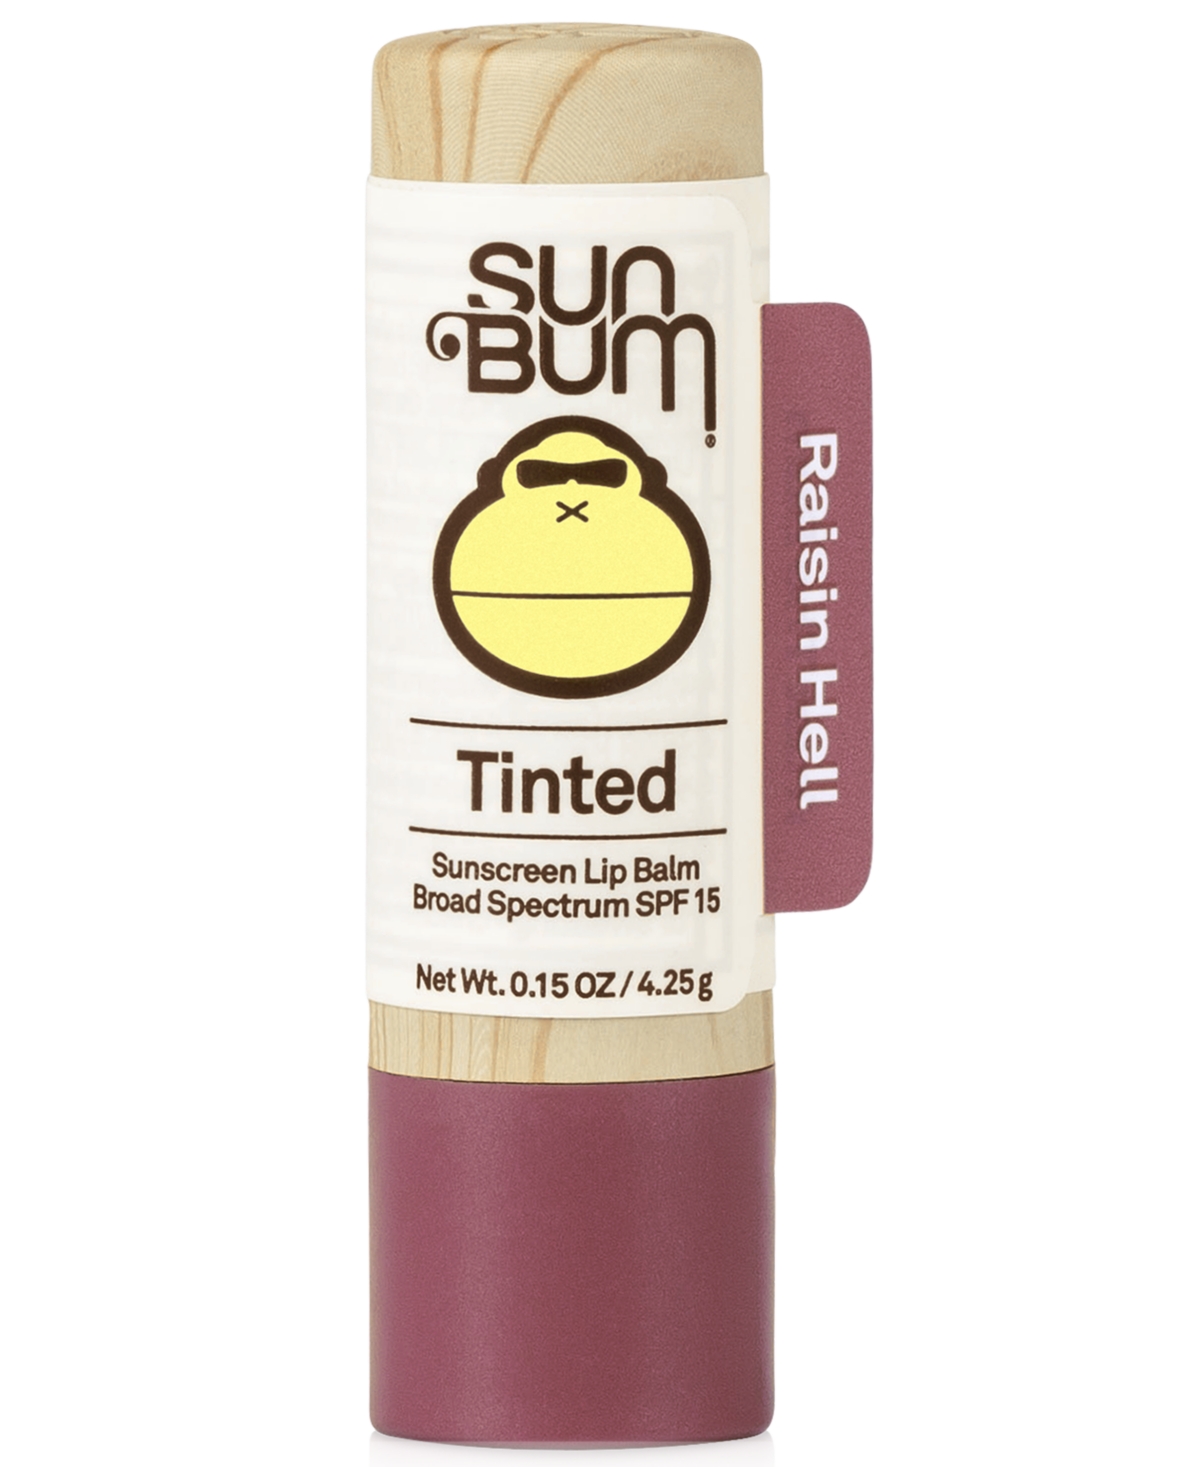 Tinted Sunscreen Lip Balm Spf 15, 0.15 oz. - Raisin Hell